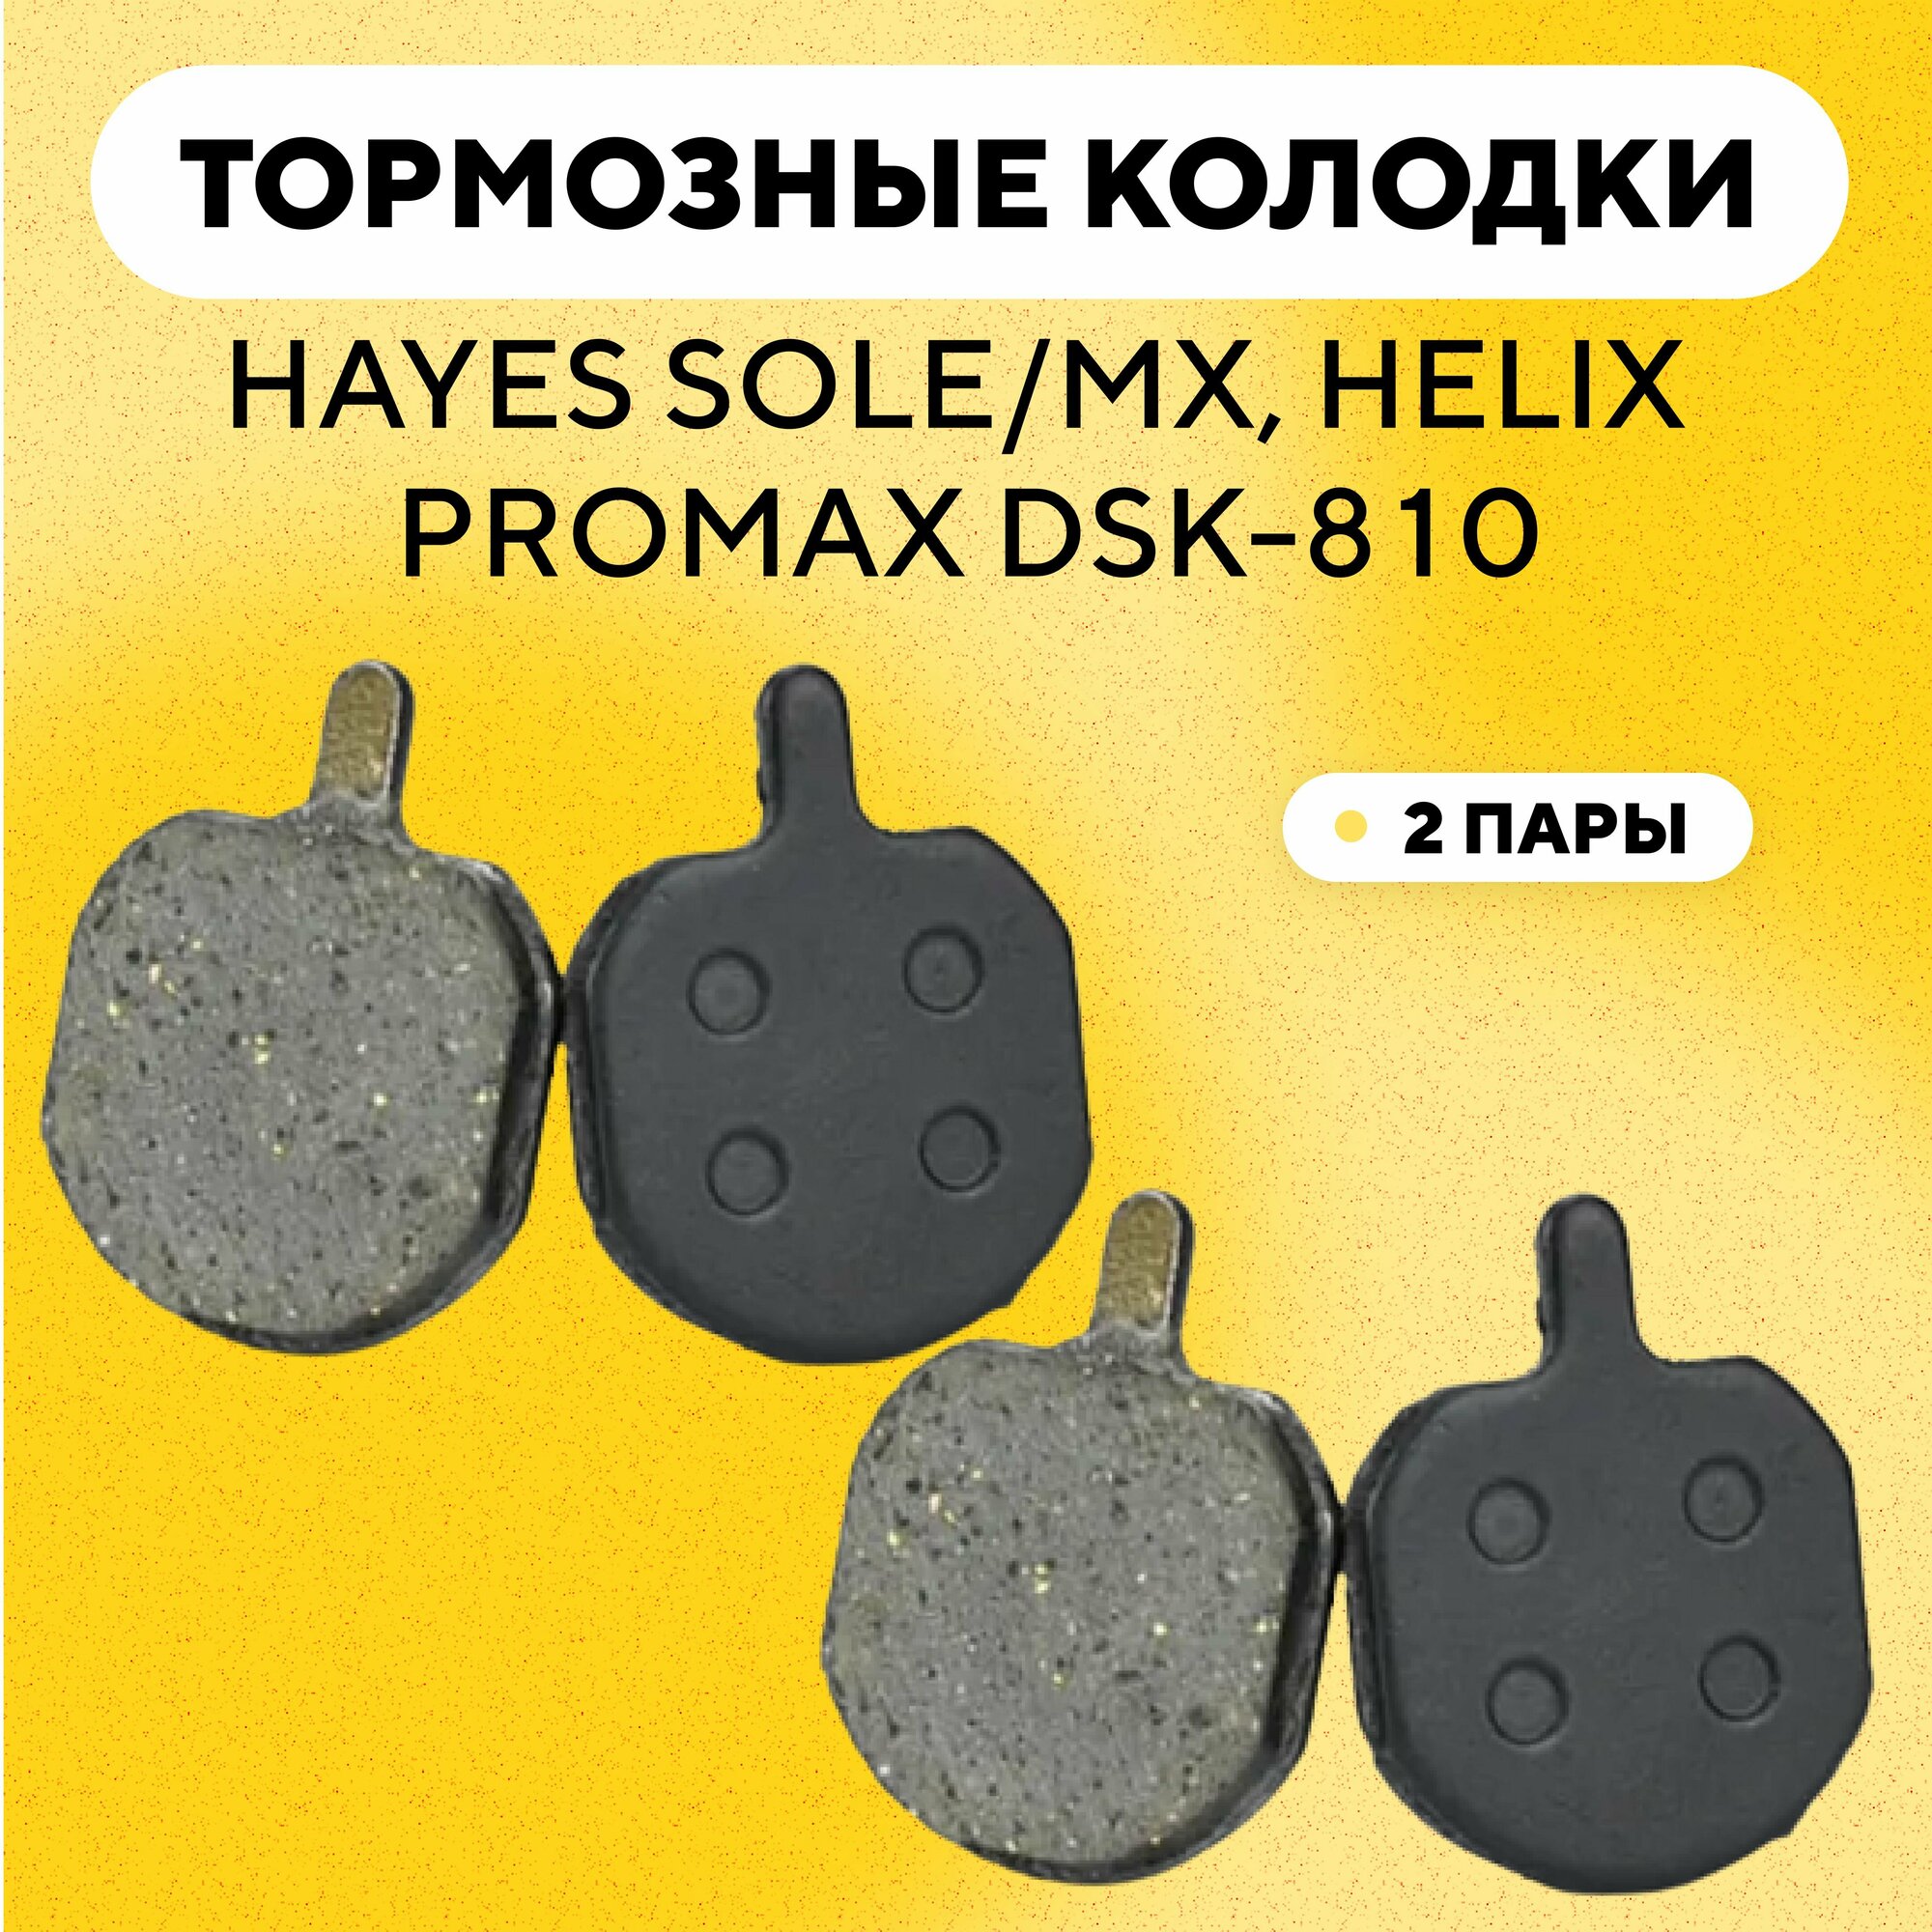 Тормозные колодки для тормозов HAYES SOLE/MX, HELIX, Promax DSK-810 электросамоката, велосипеда (G-018, комплект, 2 пары)